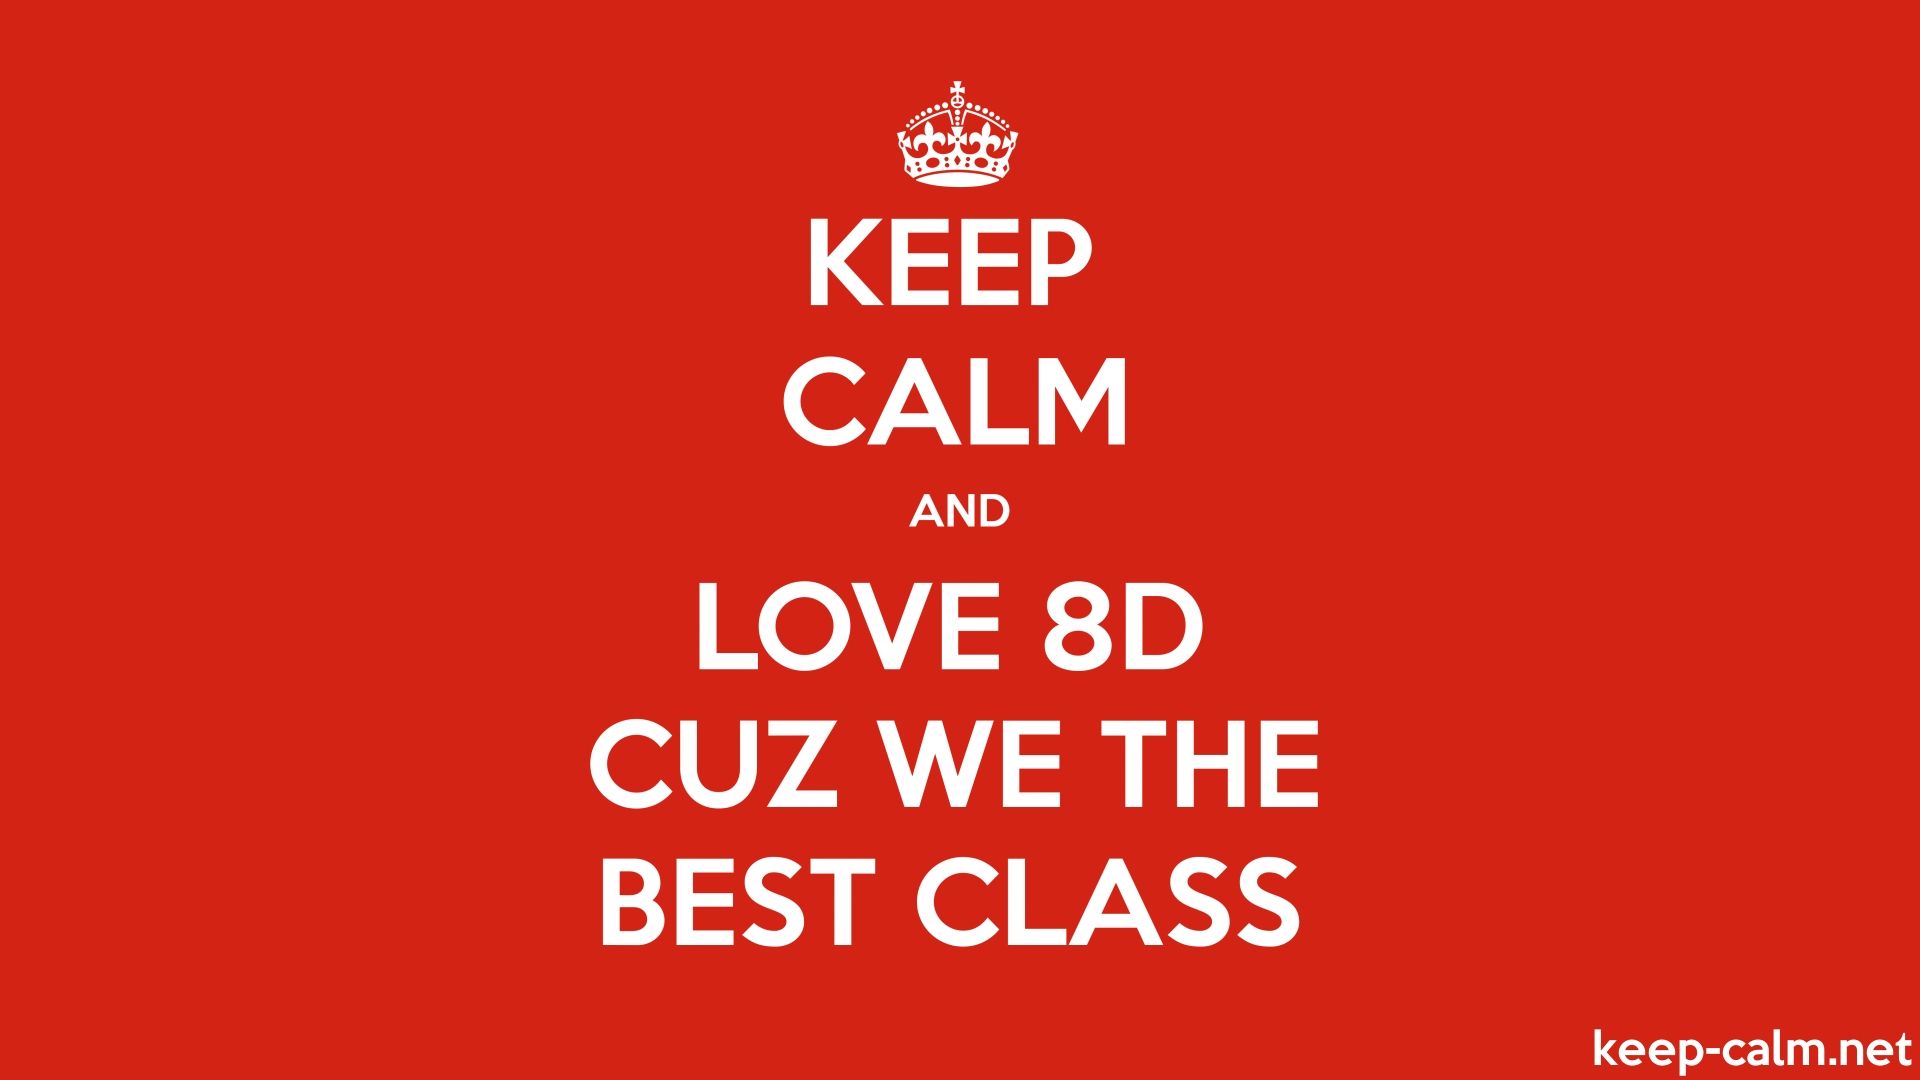 KEEP CALM AND LOVE 8D CUZ WE THE BEST CLASS